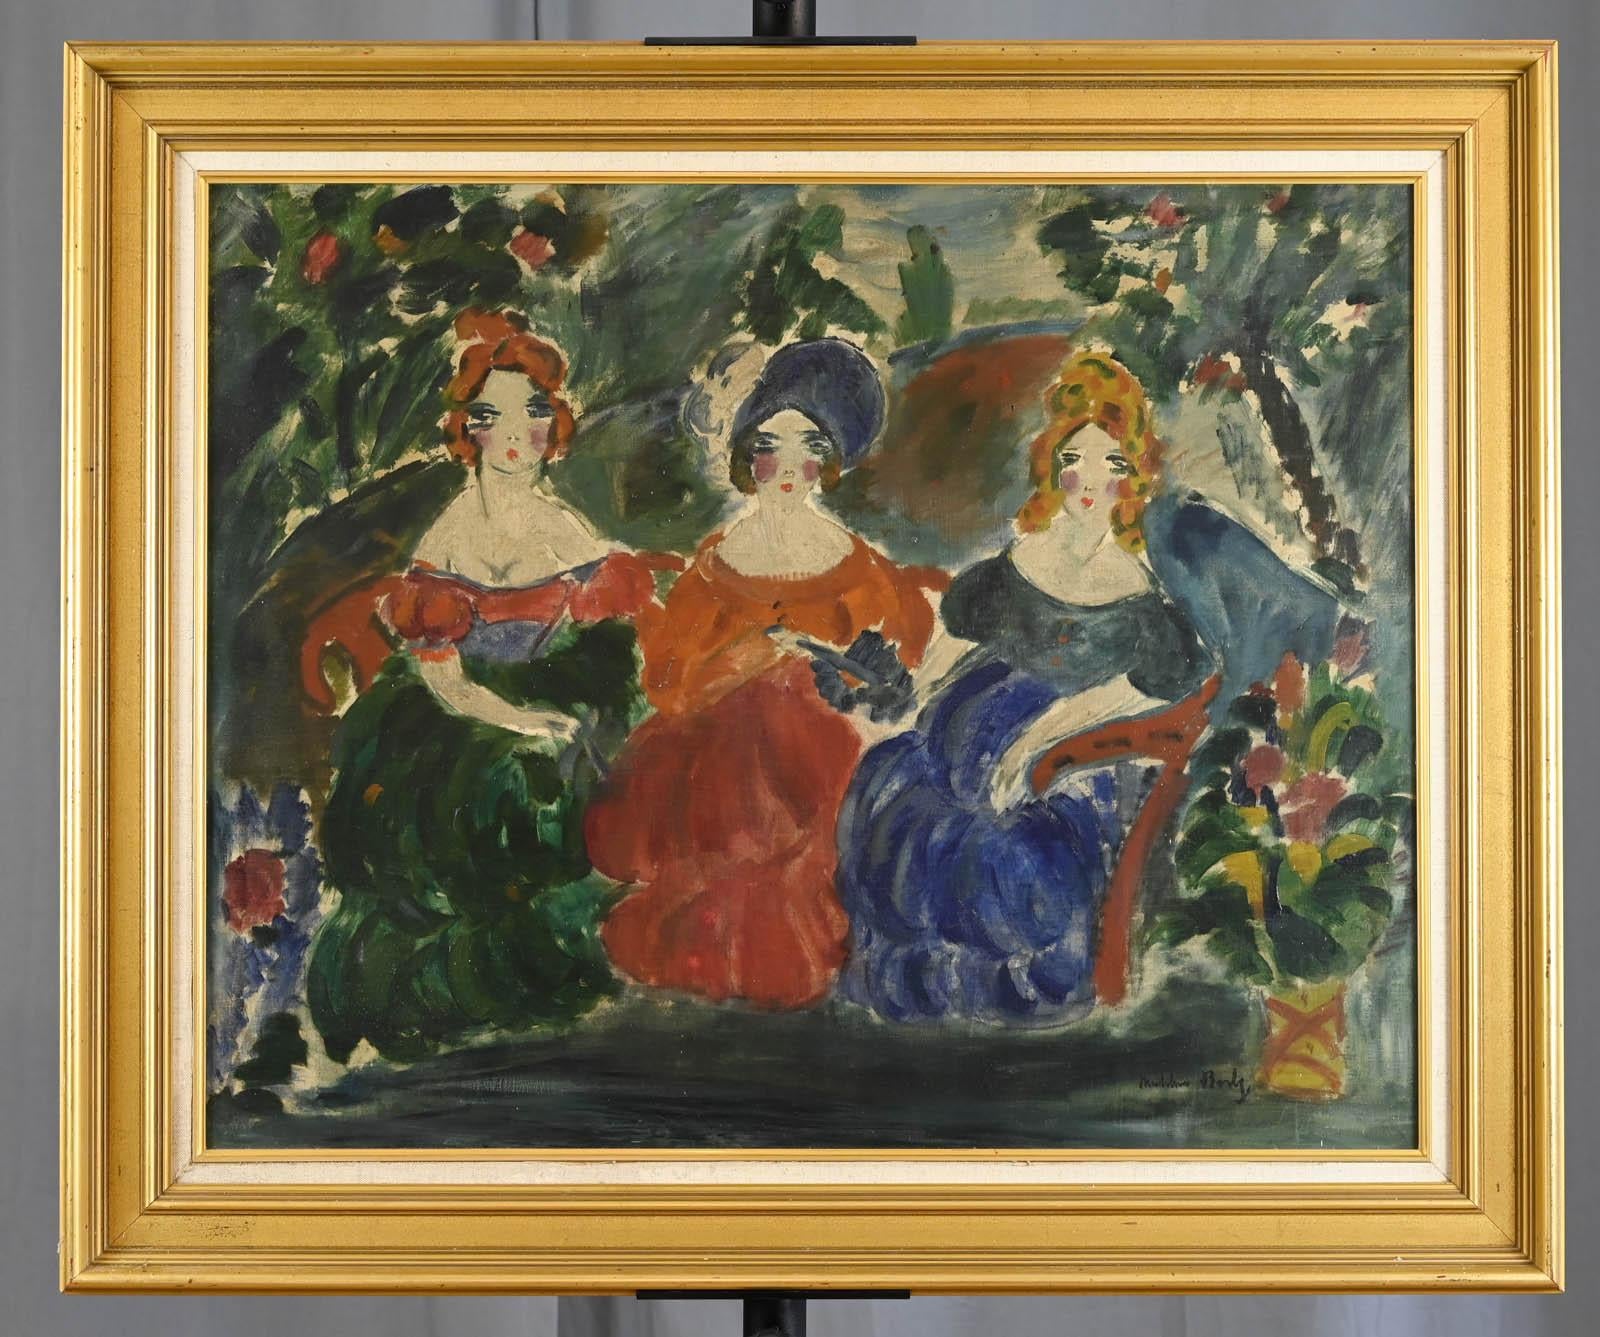 Les femmes au jardin - Fauvist Painting by Berly Vlaminck